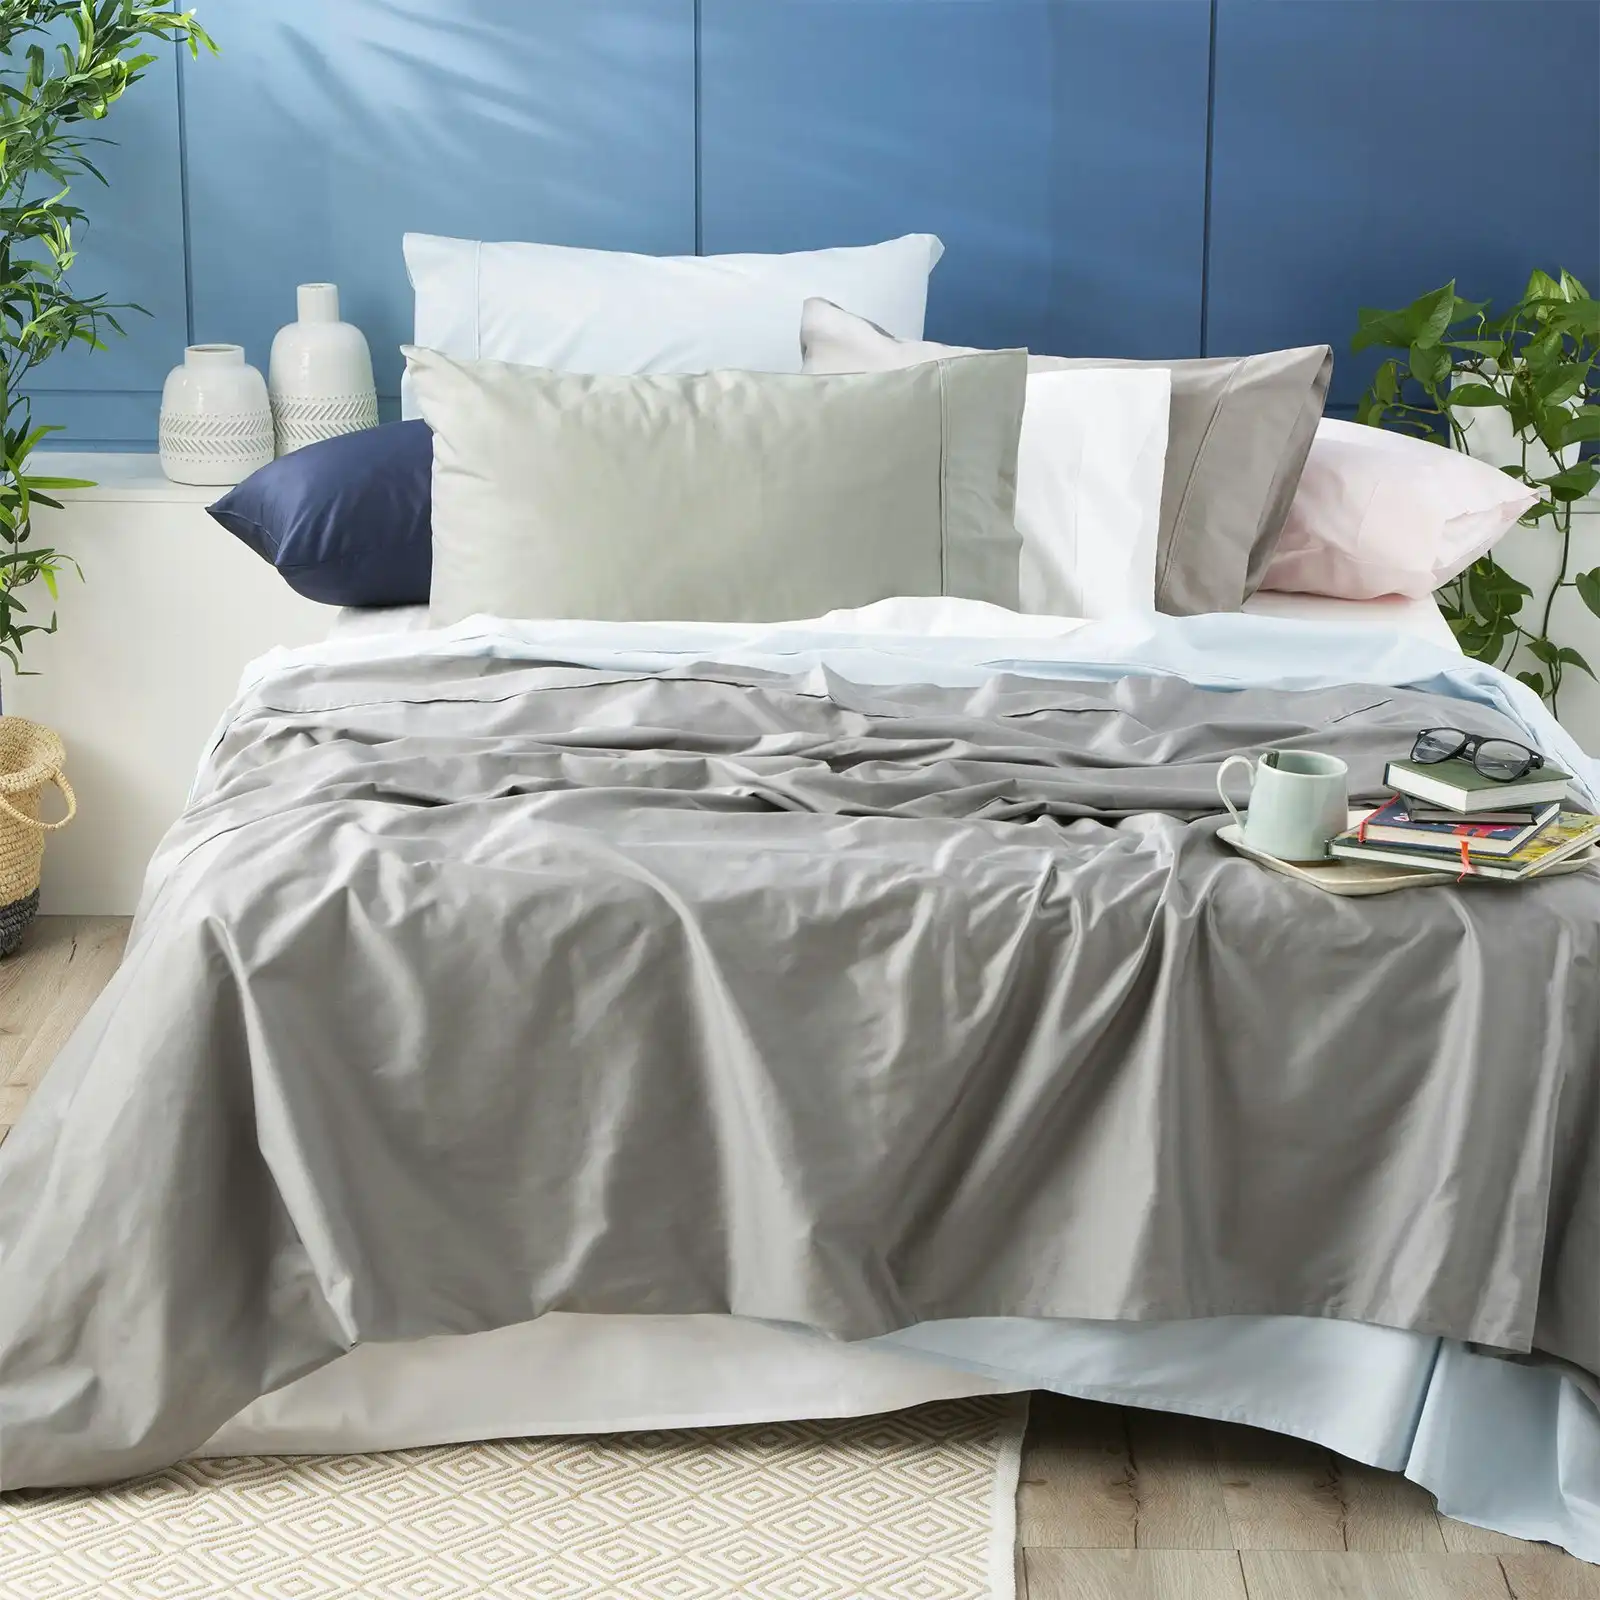 Park Avenue Double Bed Sheet/Pillowcases Set 500TC Bamboo Cotton Bedding Dove